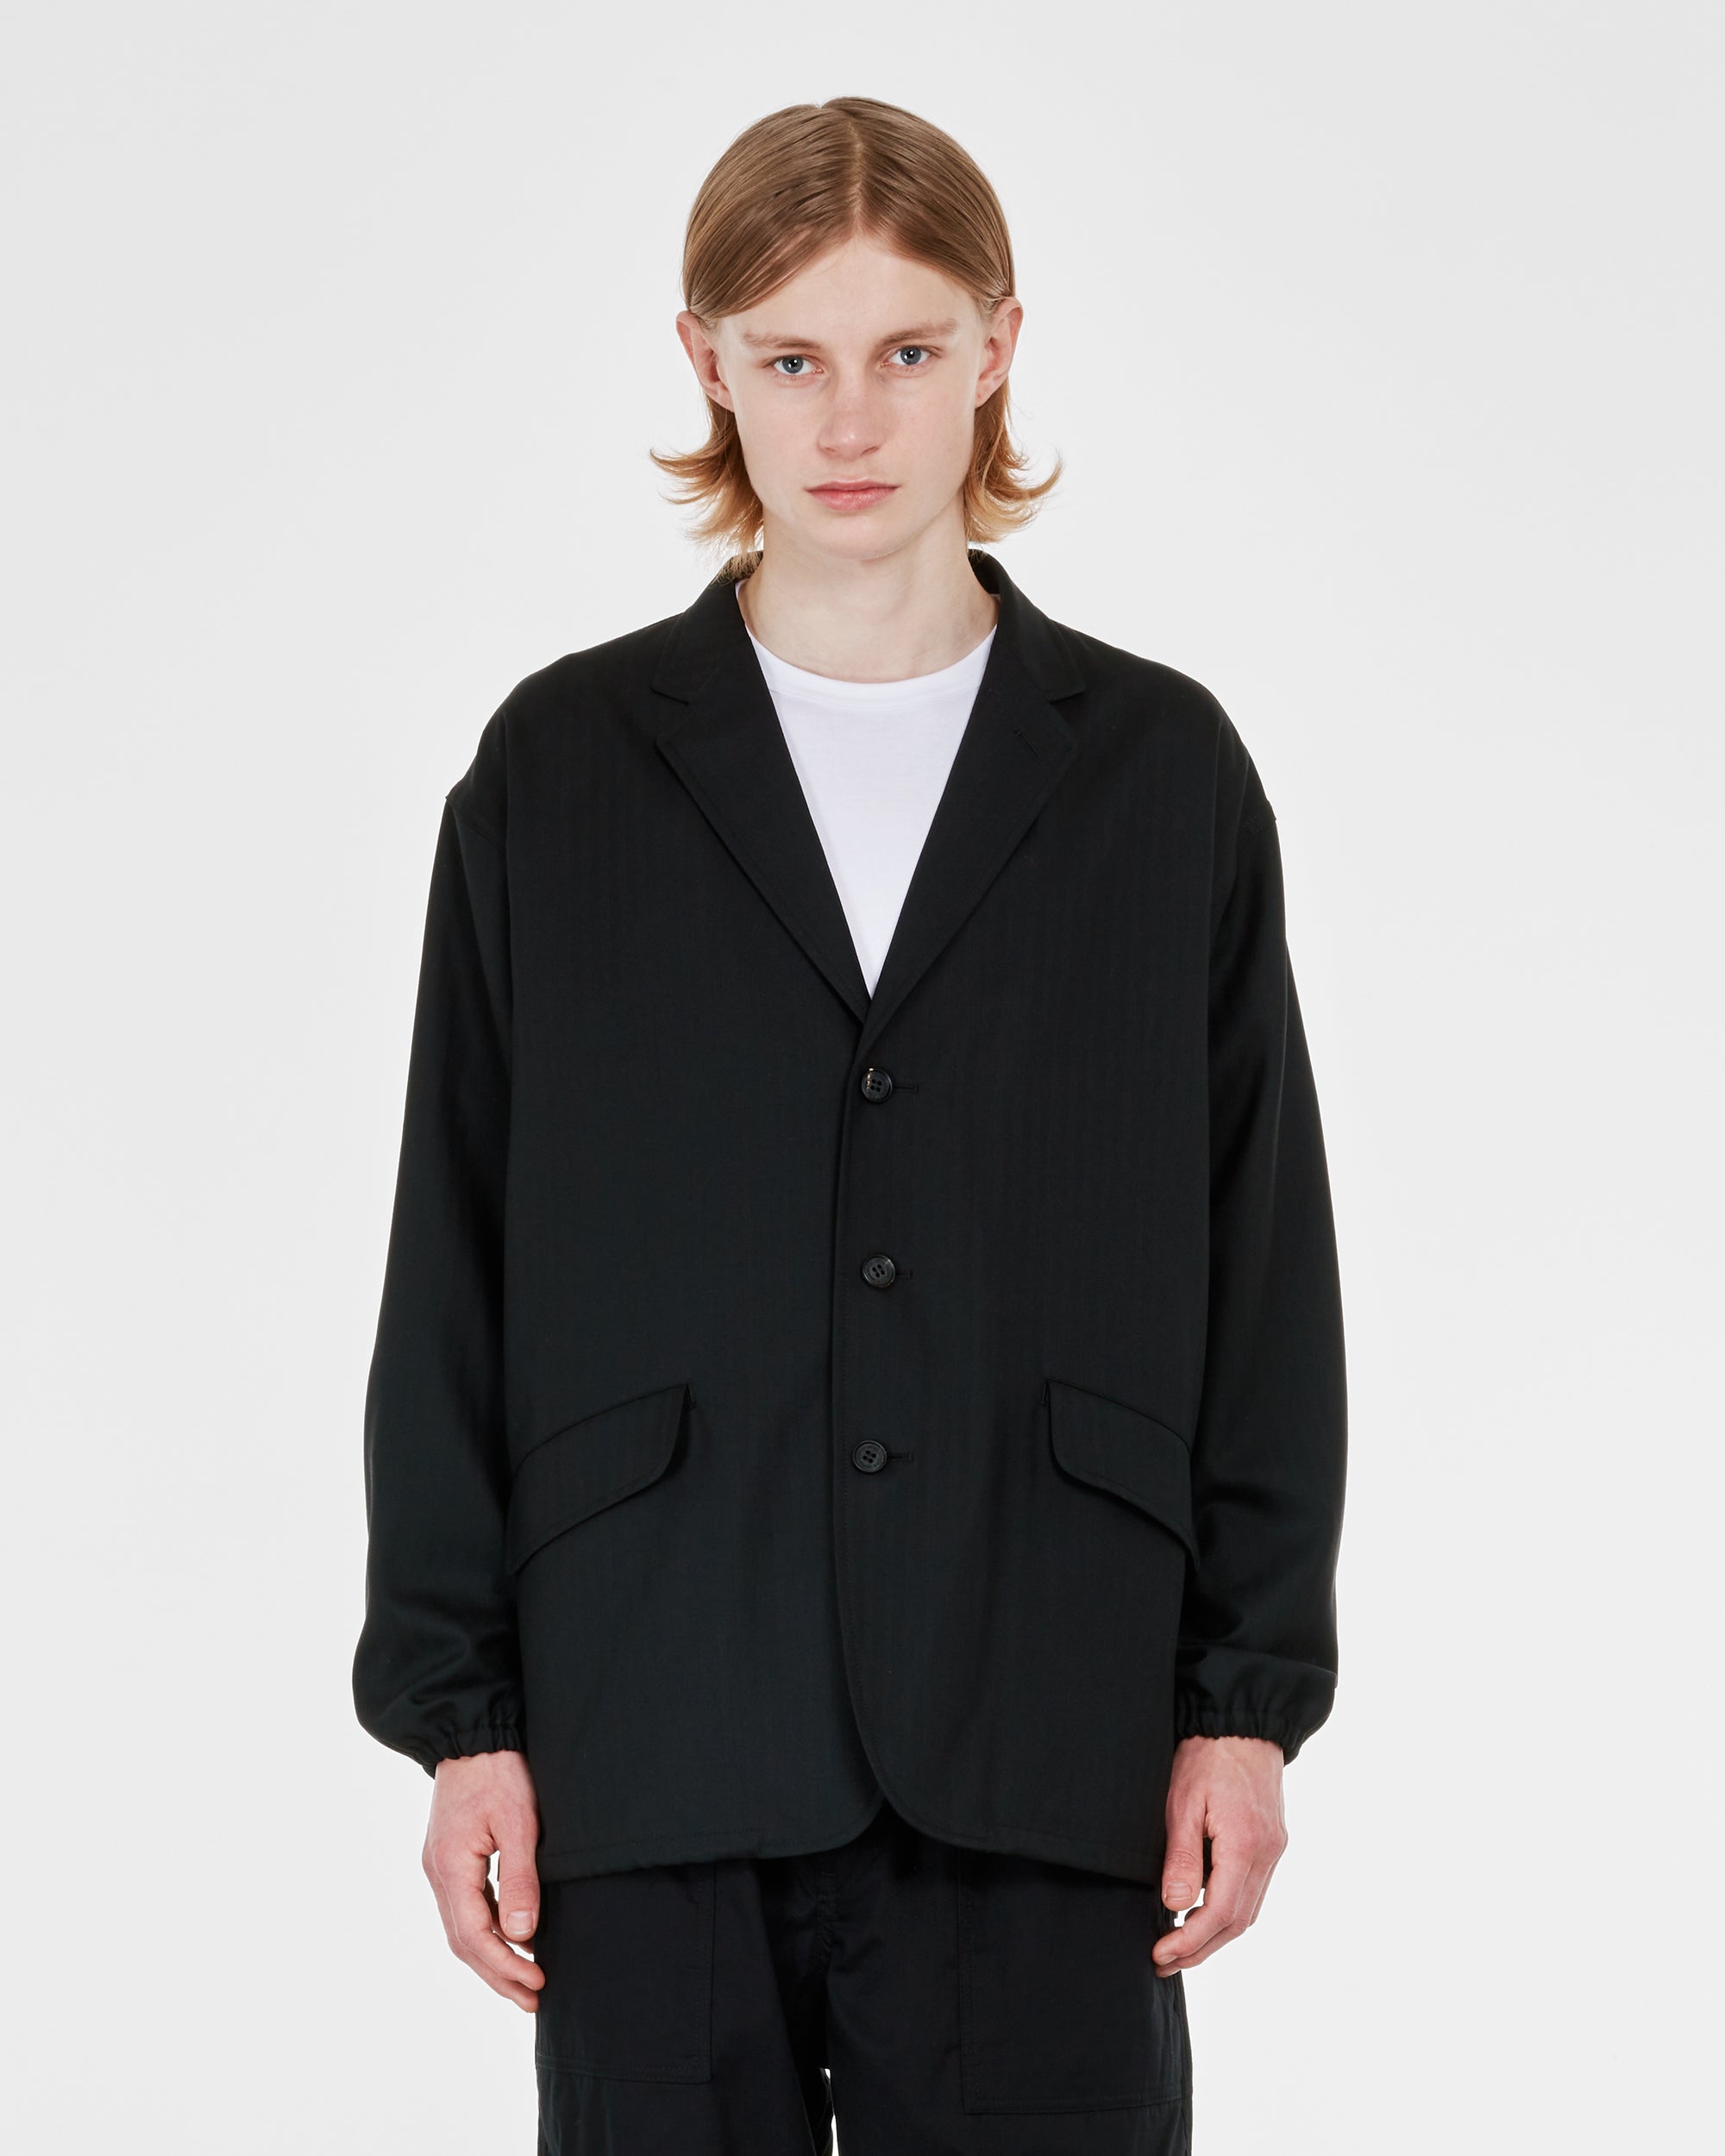 Comme des Garçons Homme - Men's Wool Herringbone Jacket - (Black) view 2